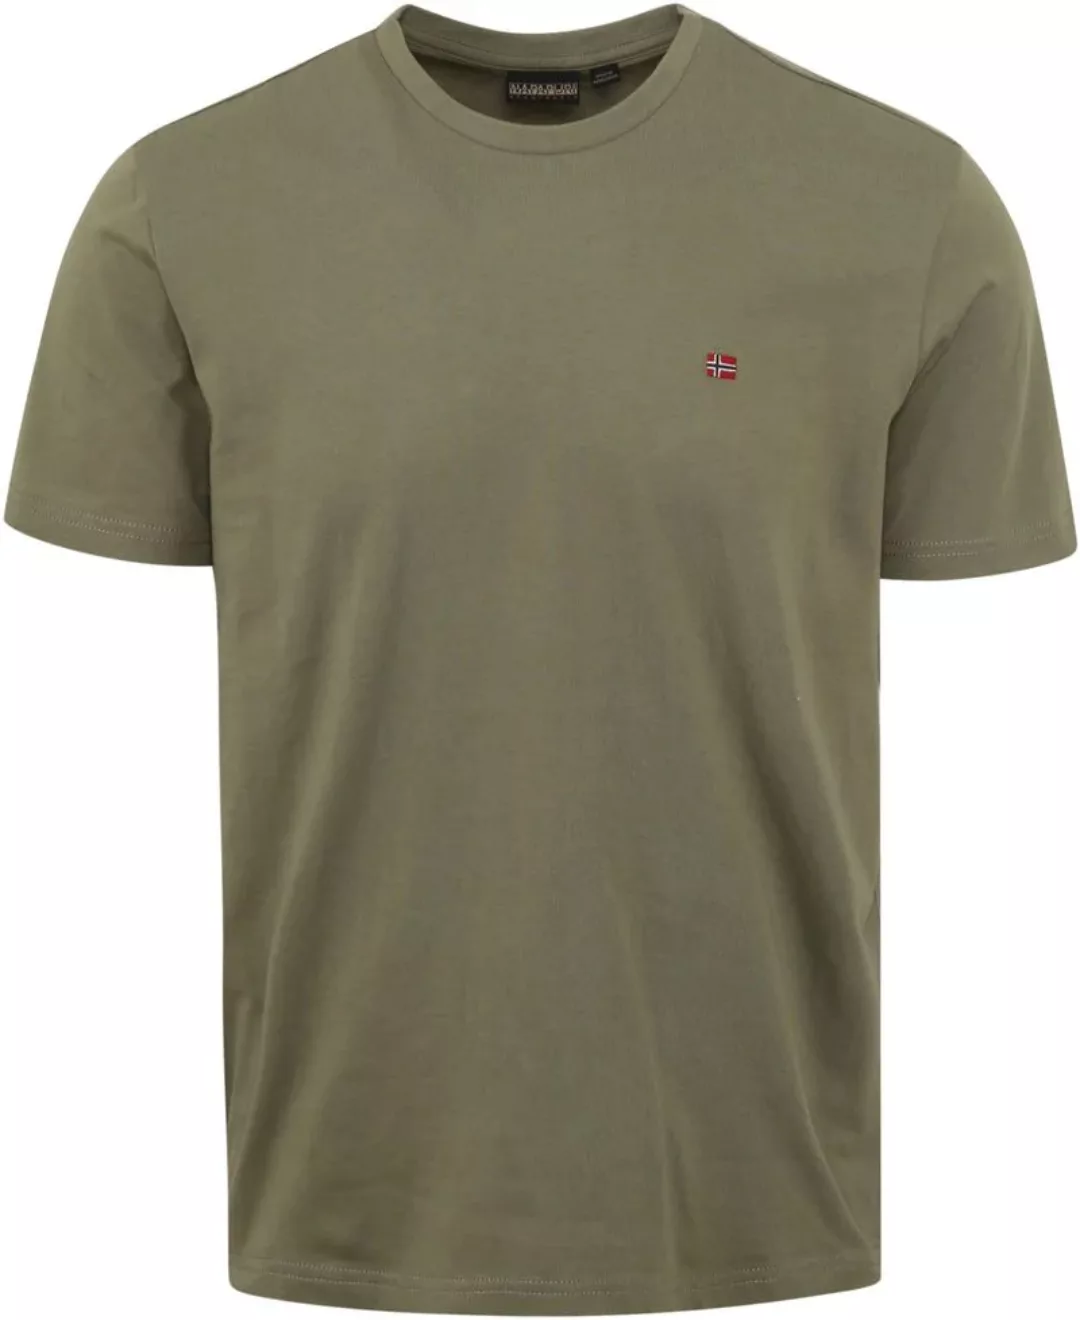 Napapijri Salis T-shirt Grün - Größe XXL günstig online kaufen